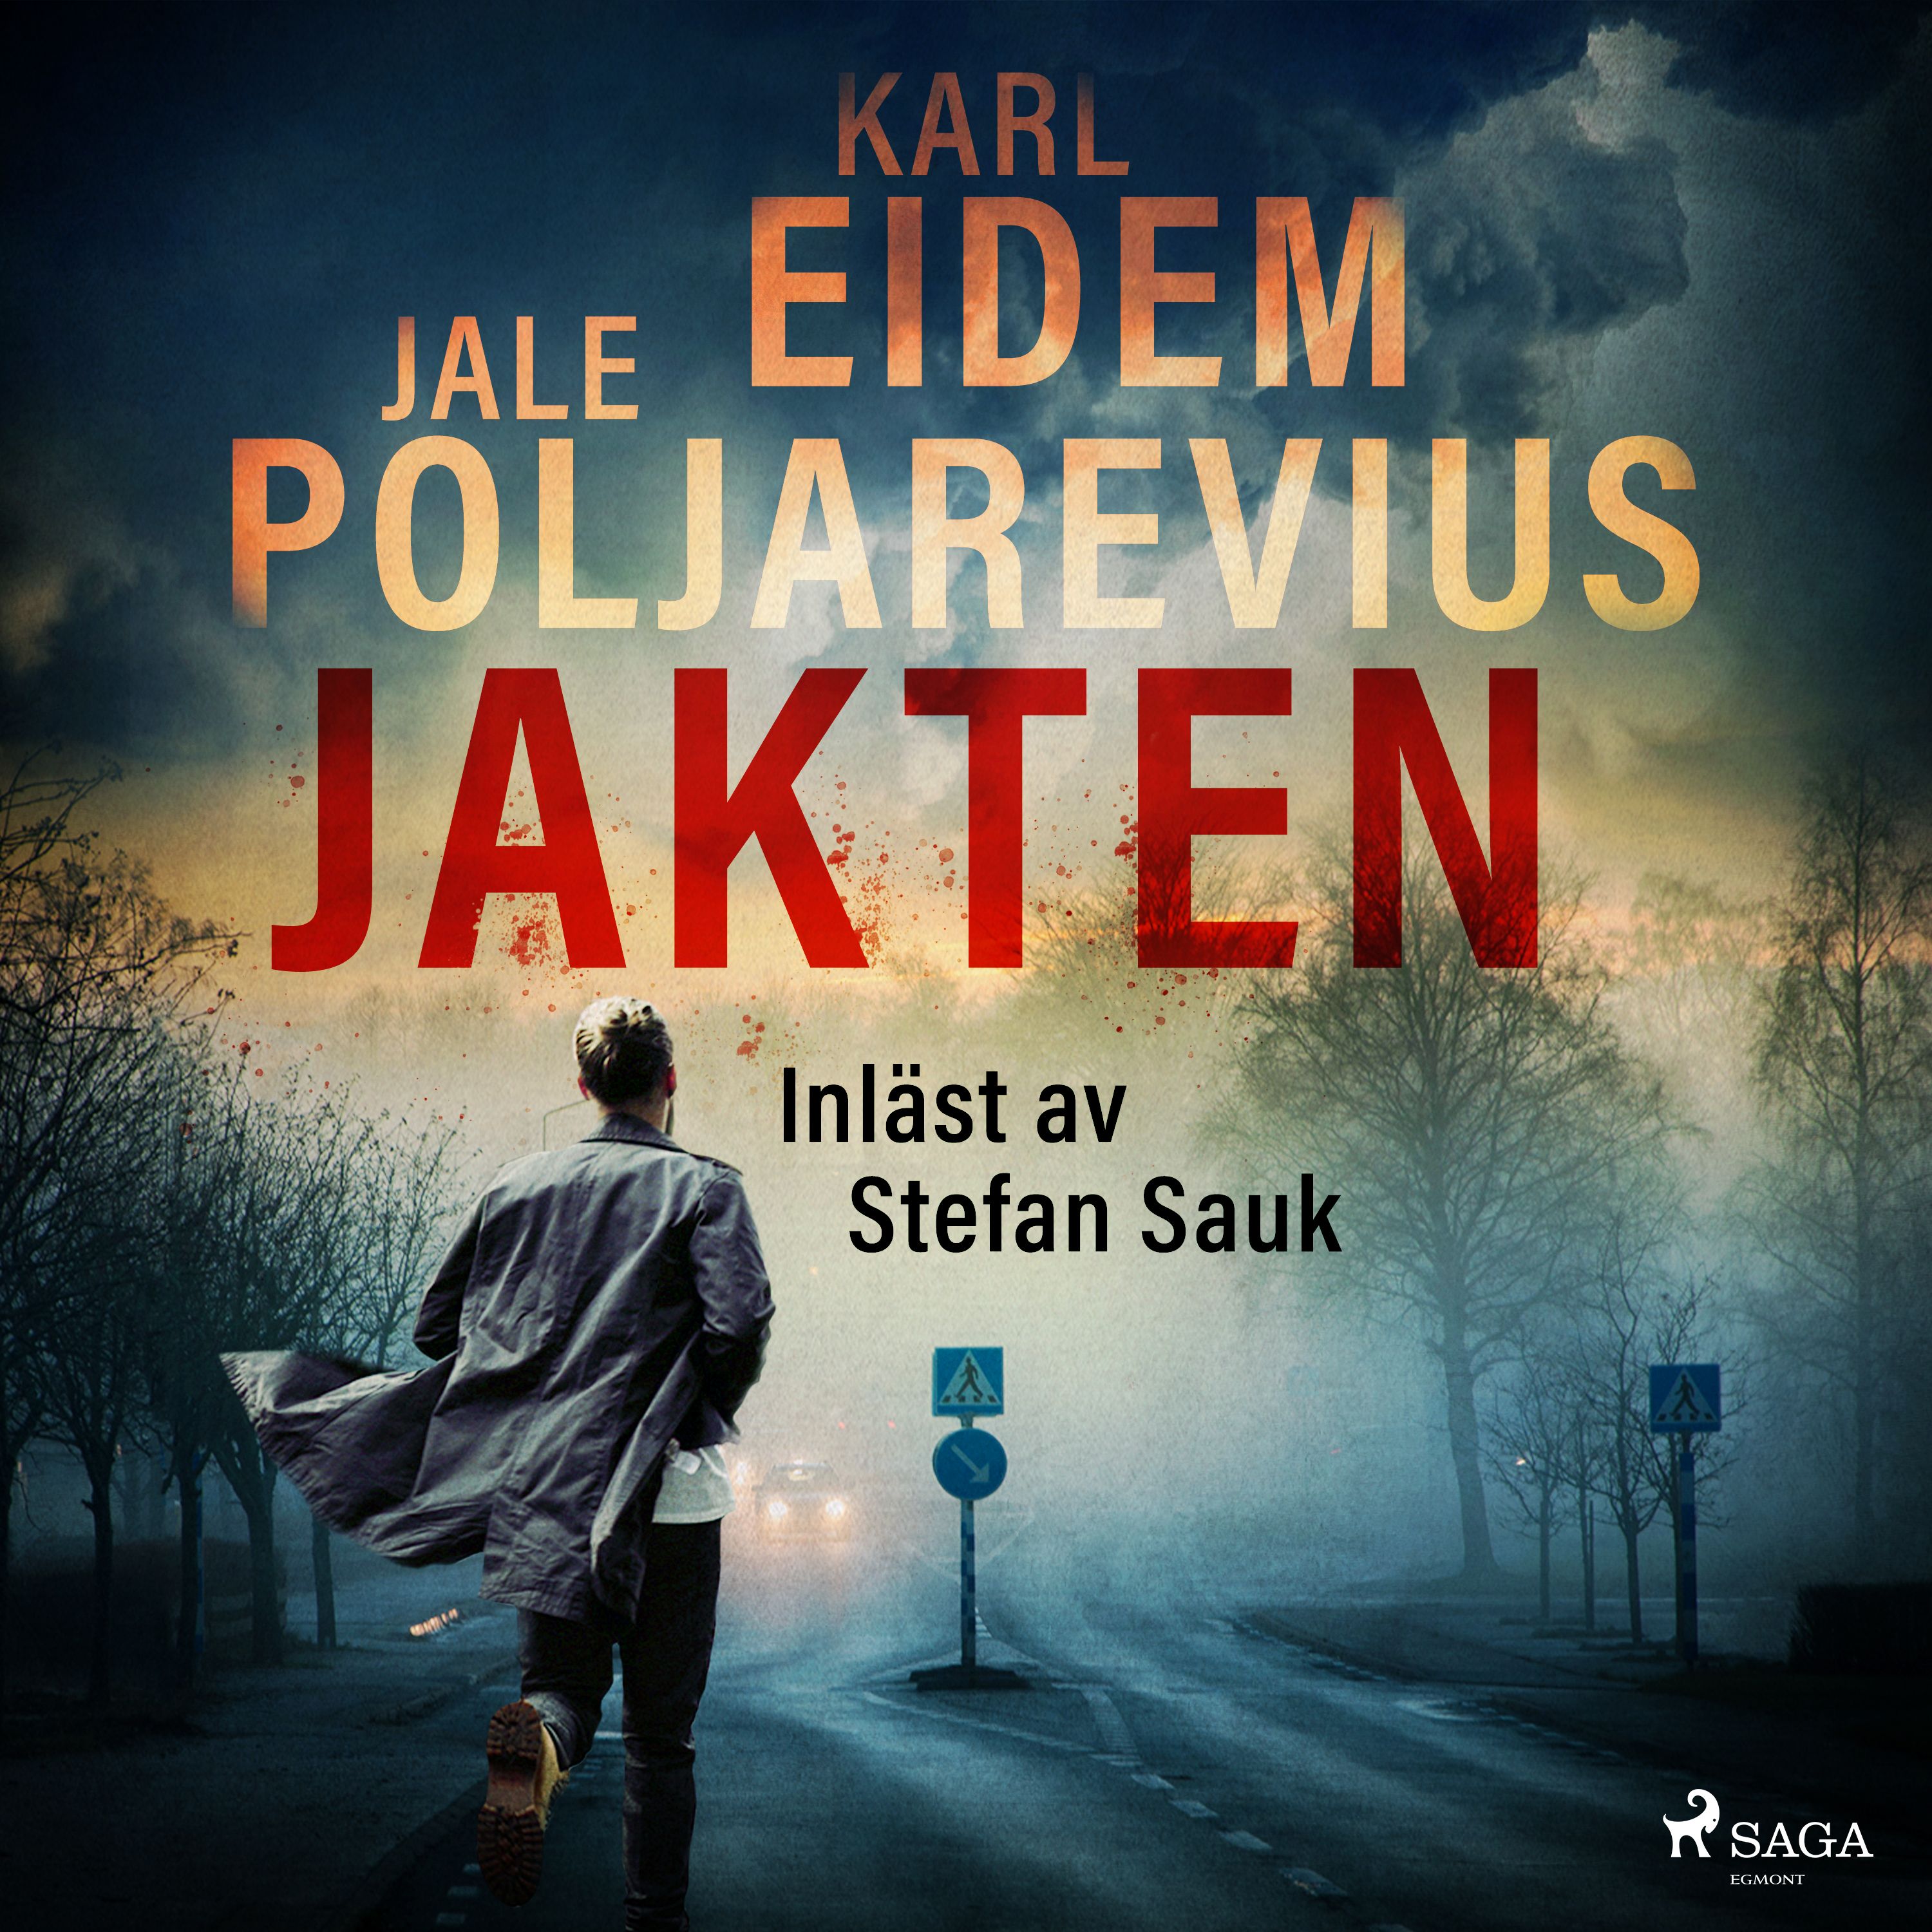 Jakten, ljudbok av Karl Eidem, Jale Poljarevius